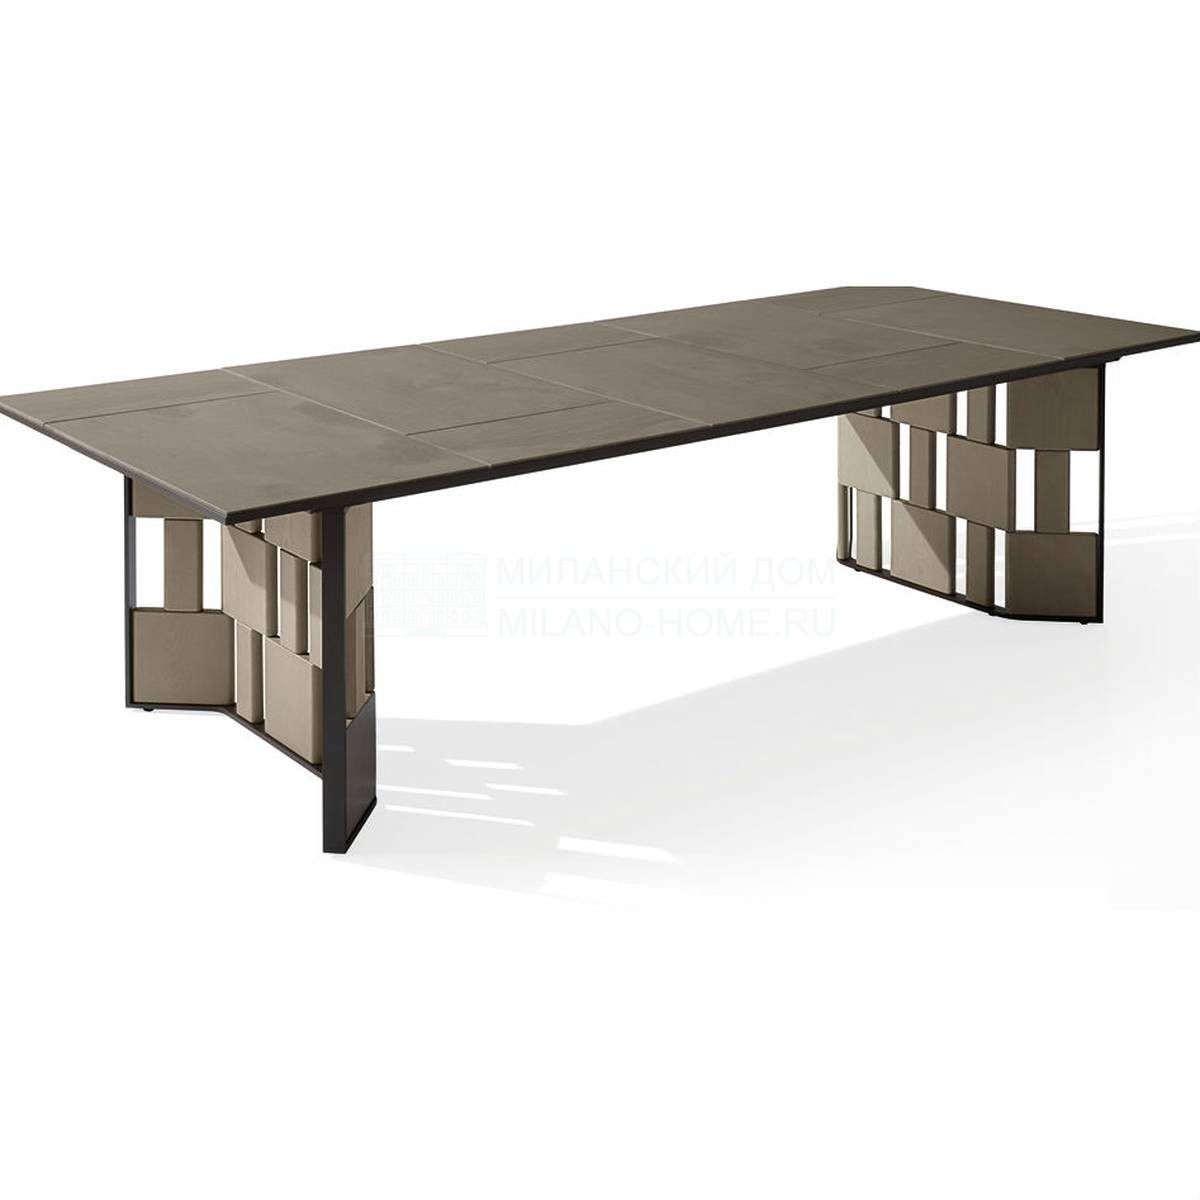 Обеденный стол Break table из Италии фабрики GIORGETTI